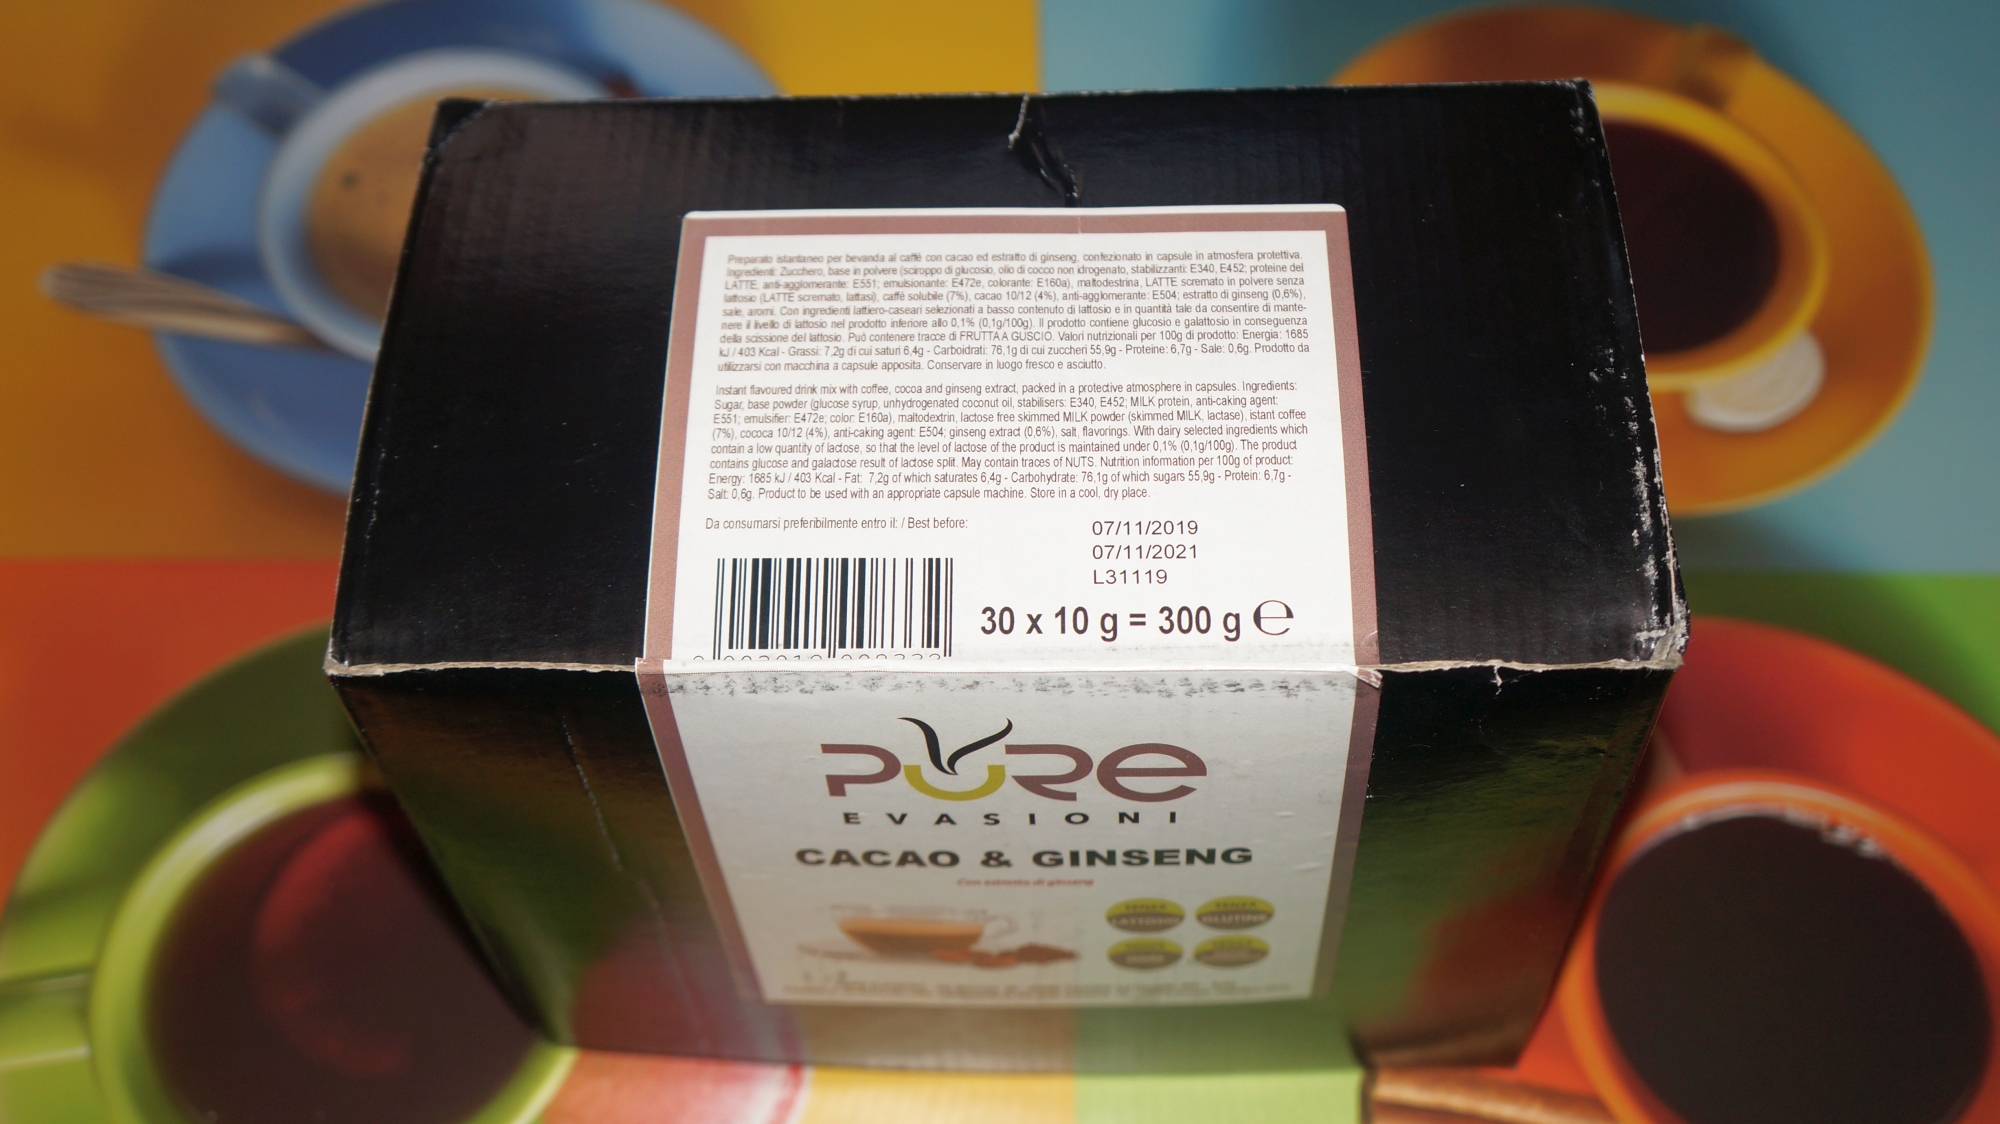 Горячий шоколад Pure Evasioni Cacao & Ginseng (капсулы Dolce Gusto)